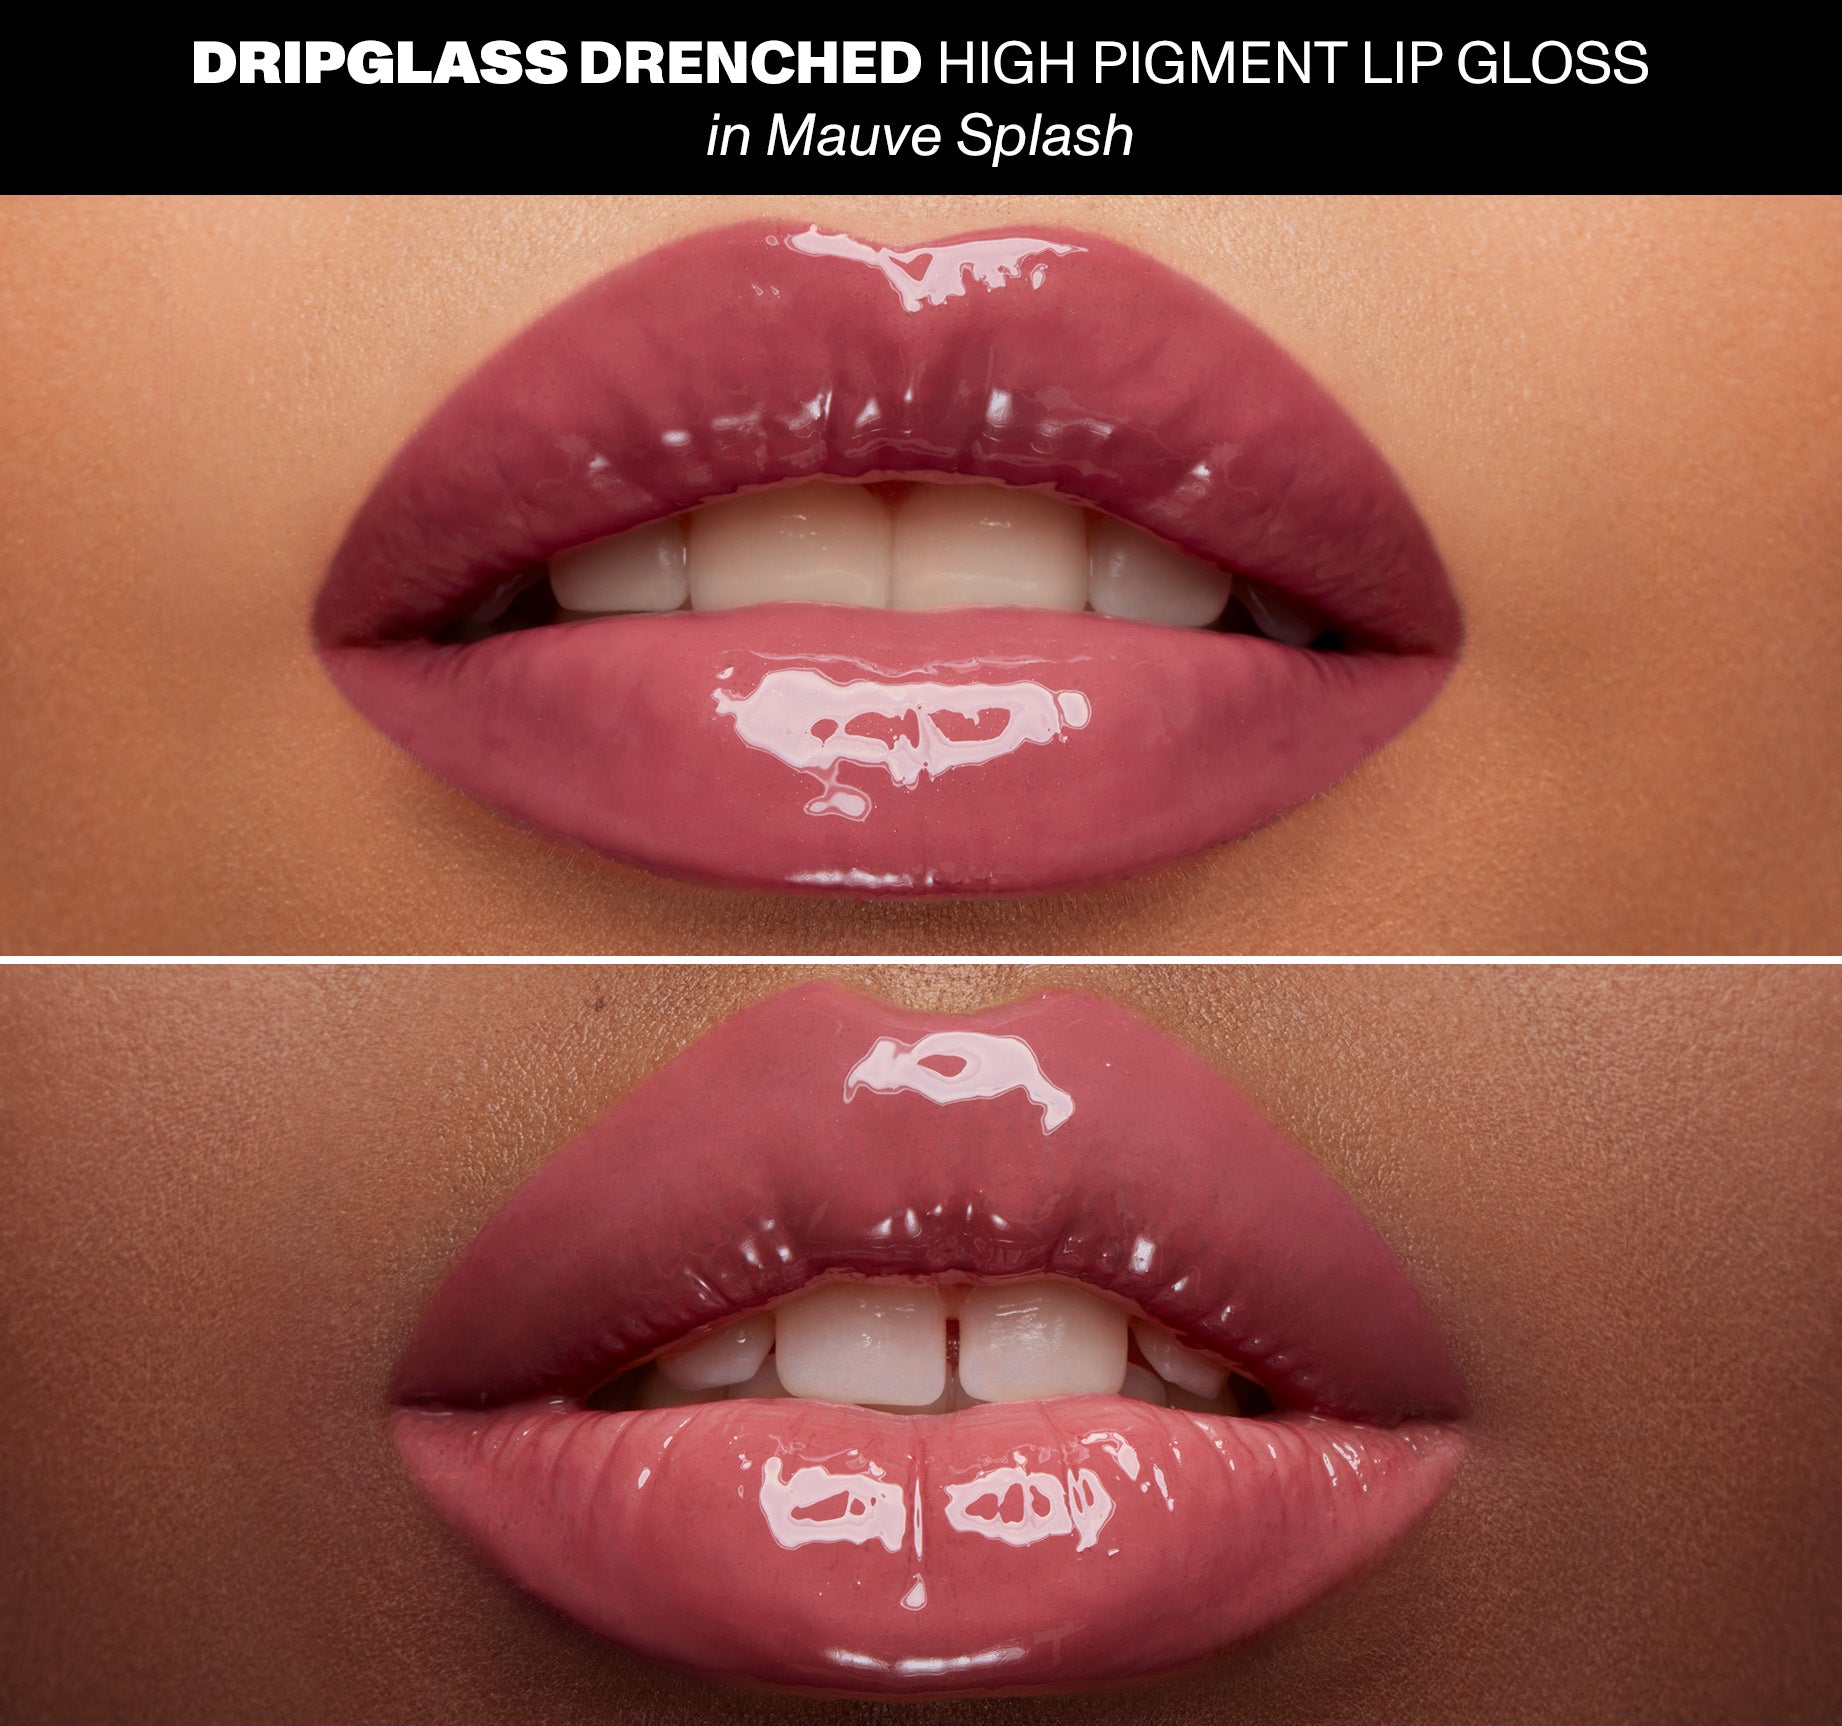 Dripglass Drenched High Pigment Lip Gloss - Mauve Splash - Image 4